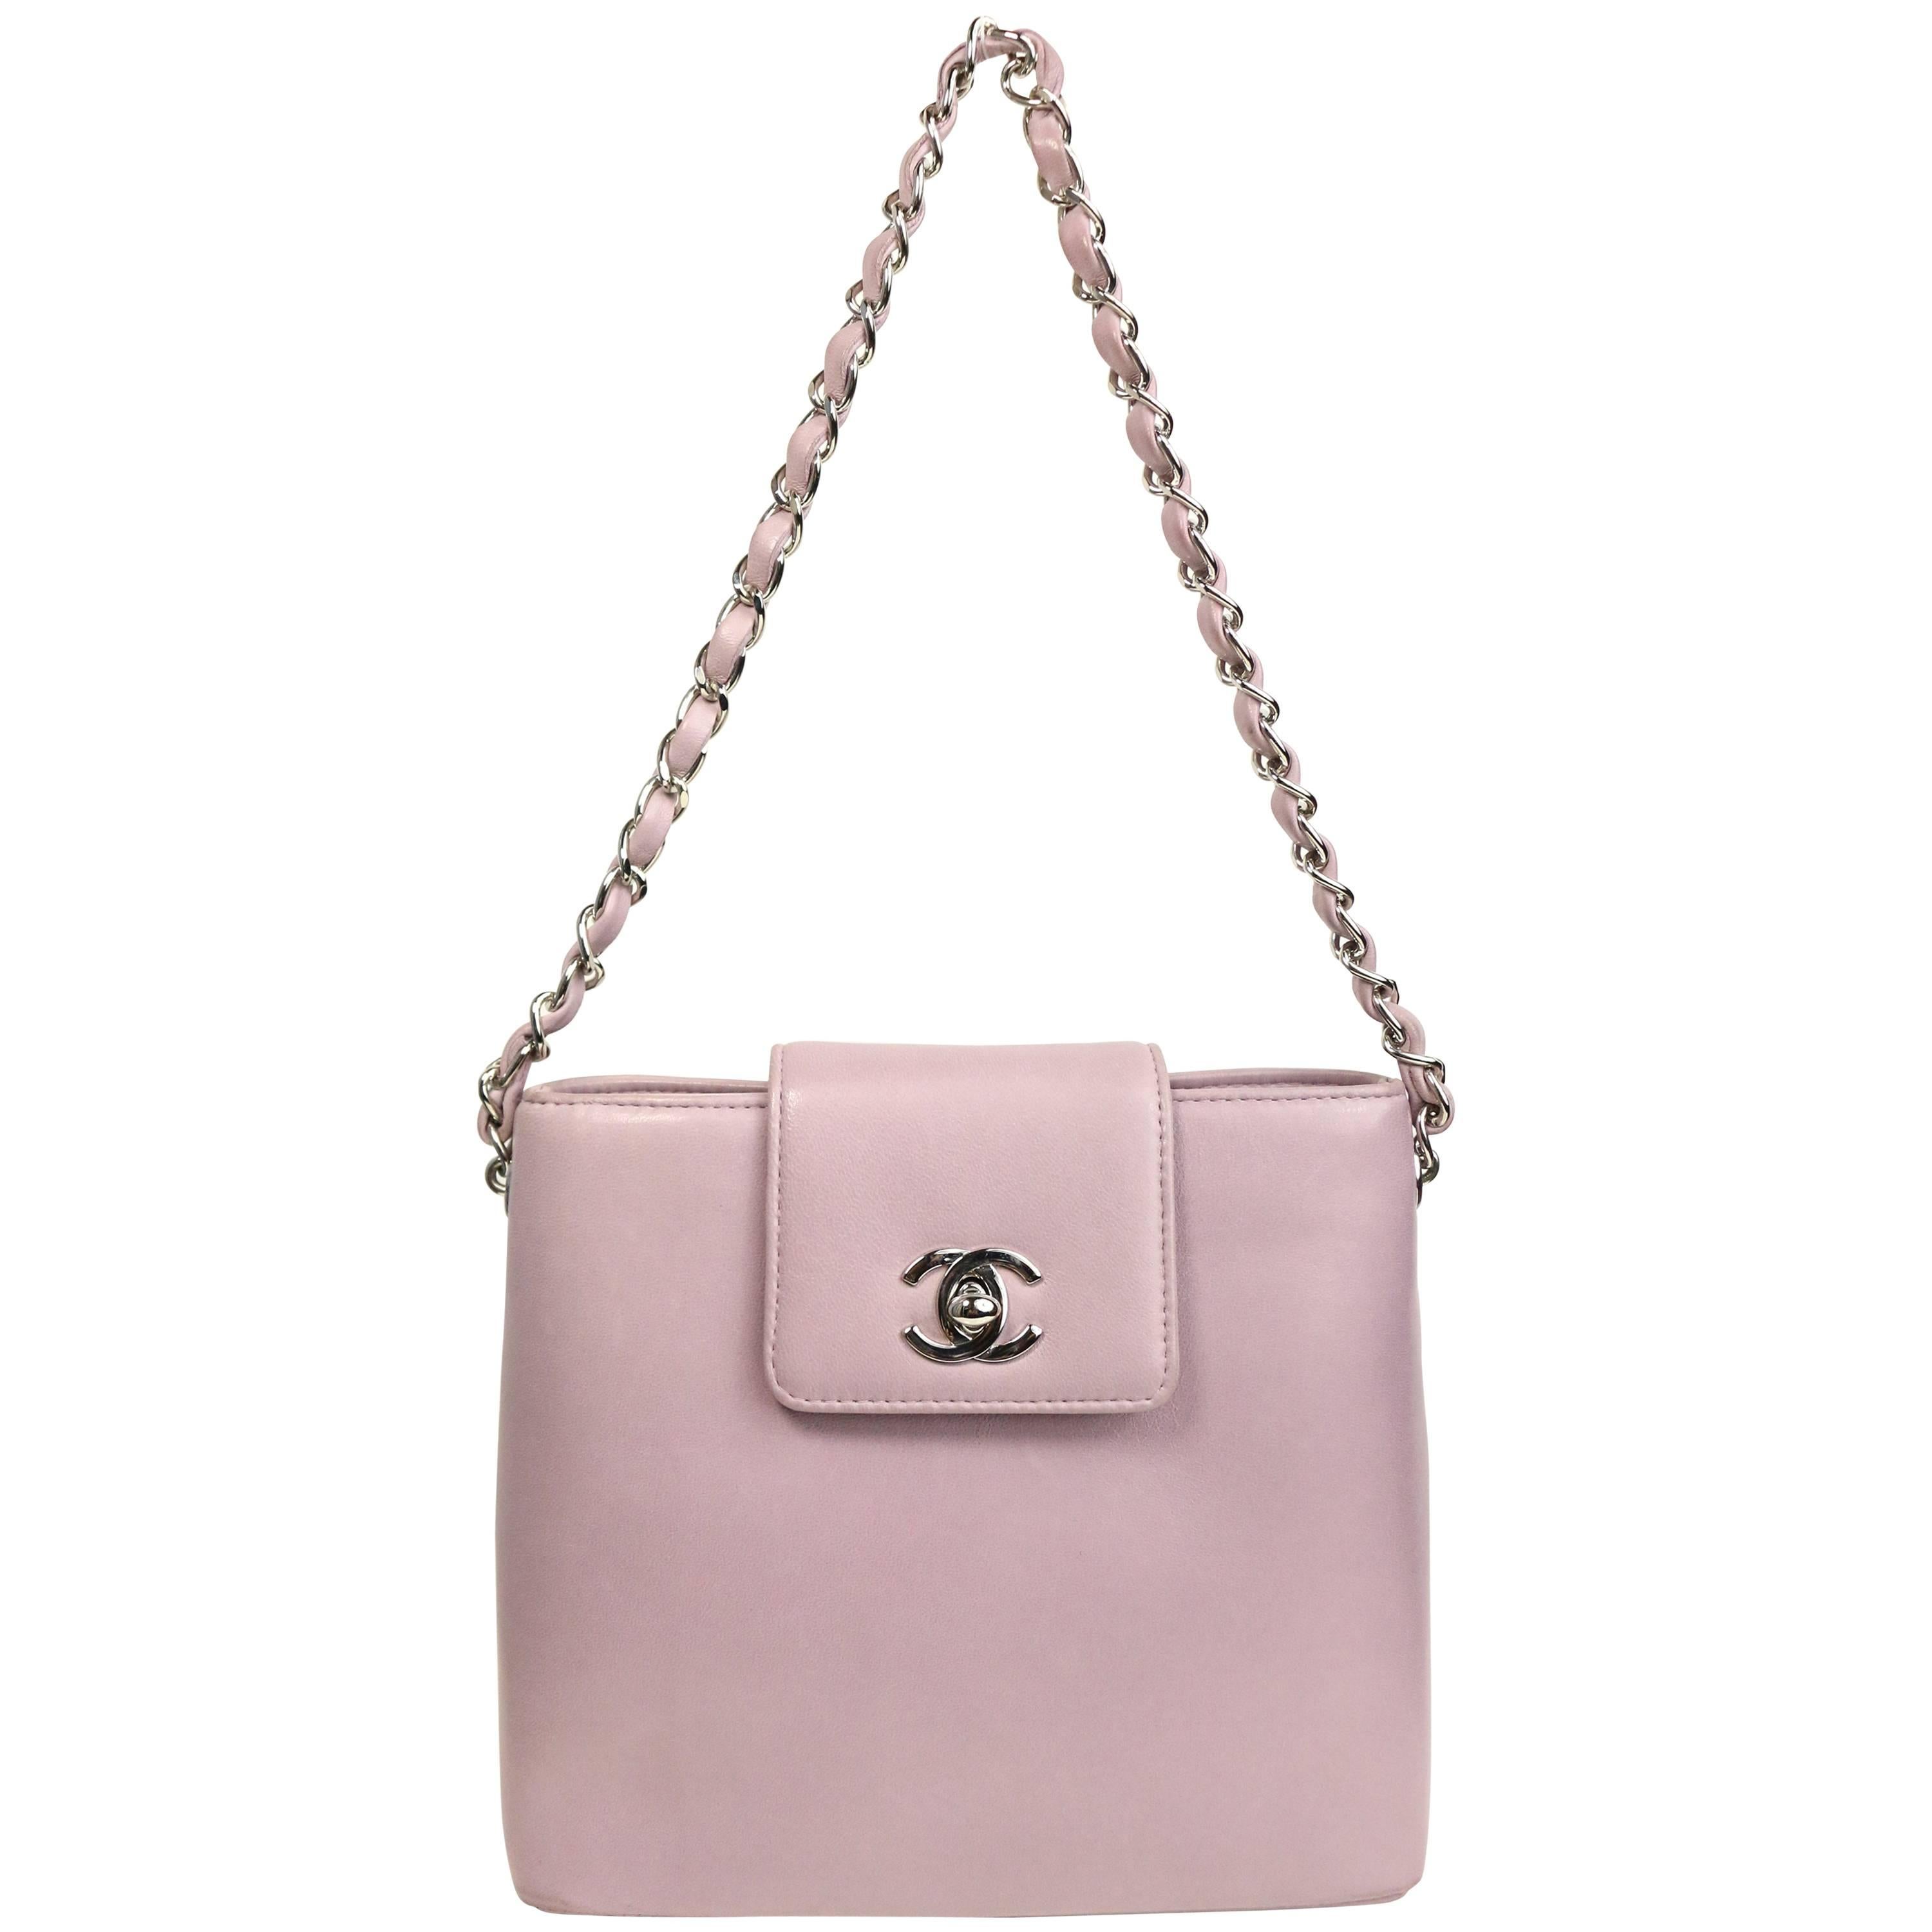 Chanel Purple Lambskin Leather Silver Chain Mini Handbag